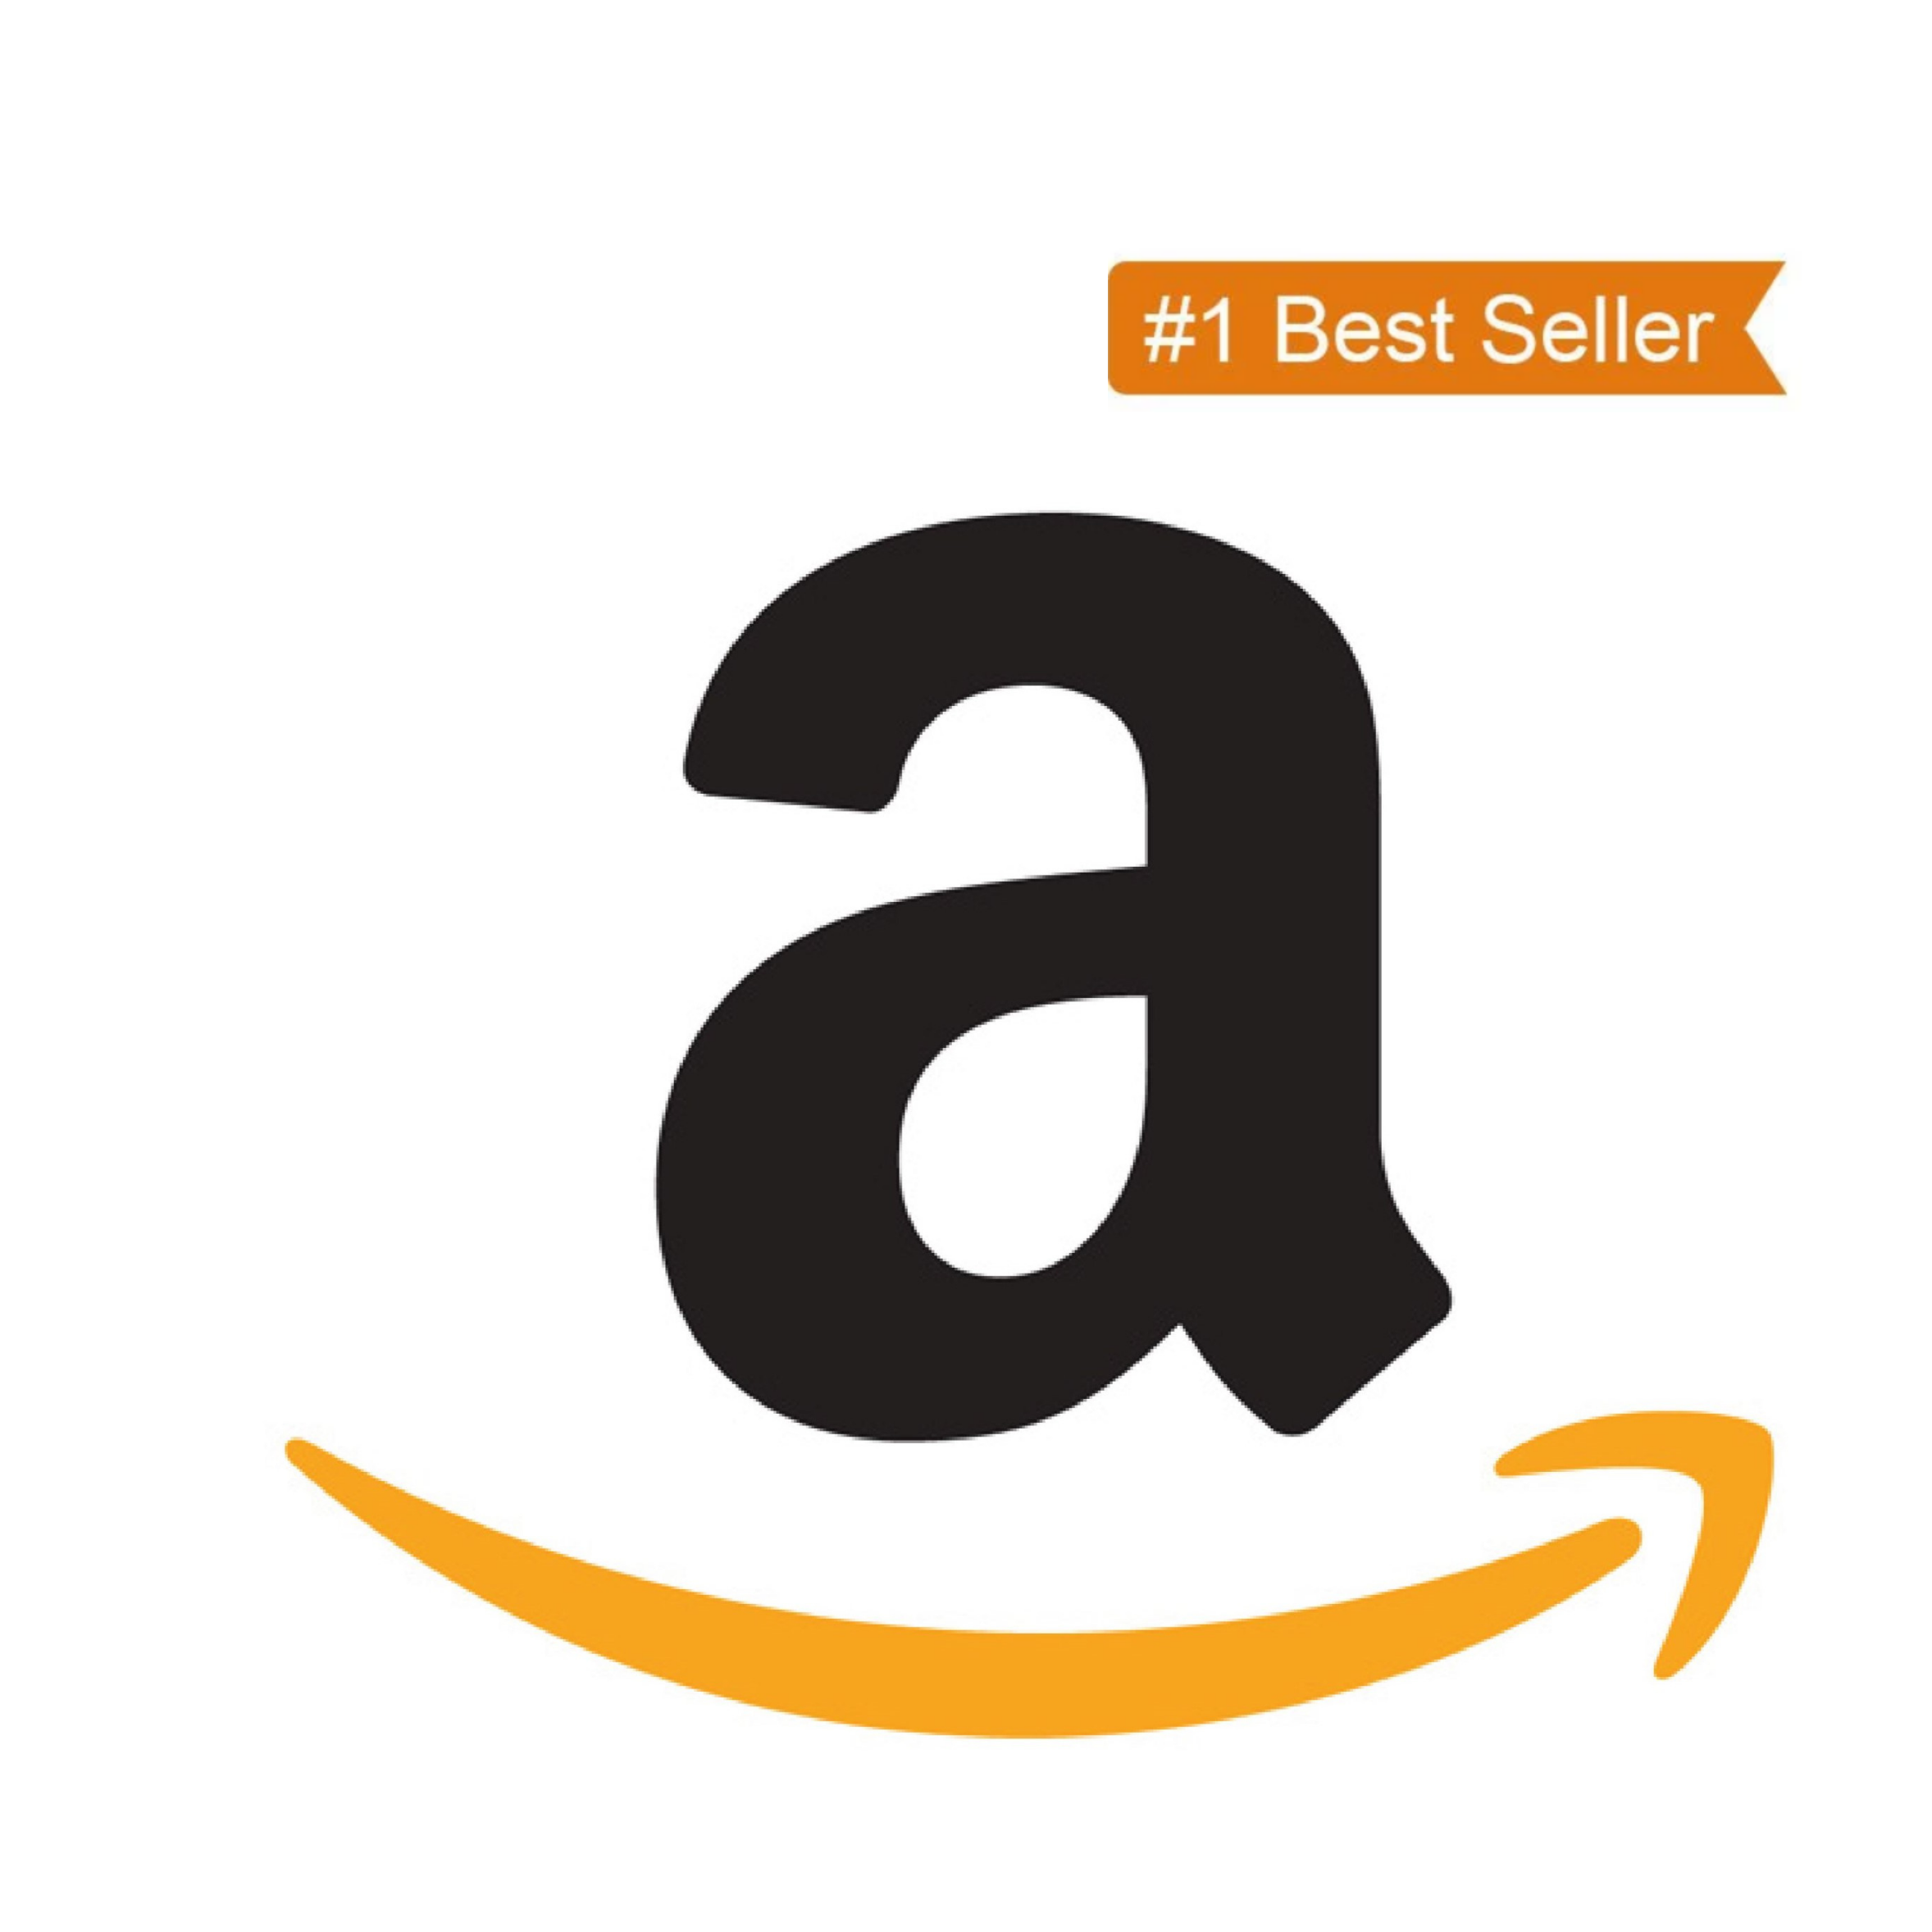 Amazon Best Sellers List Product Scraper